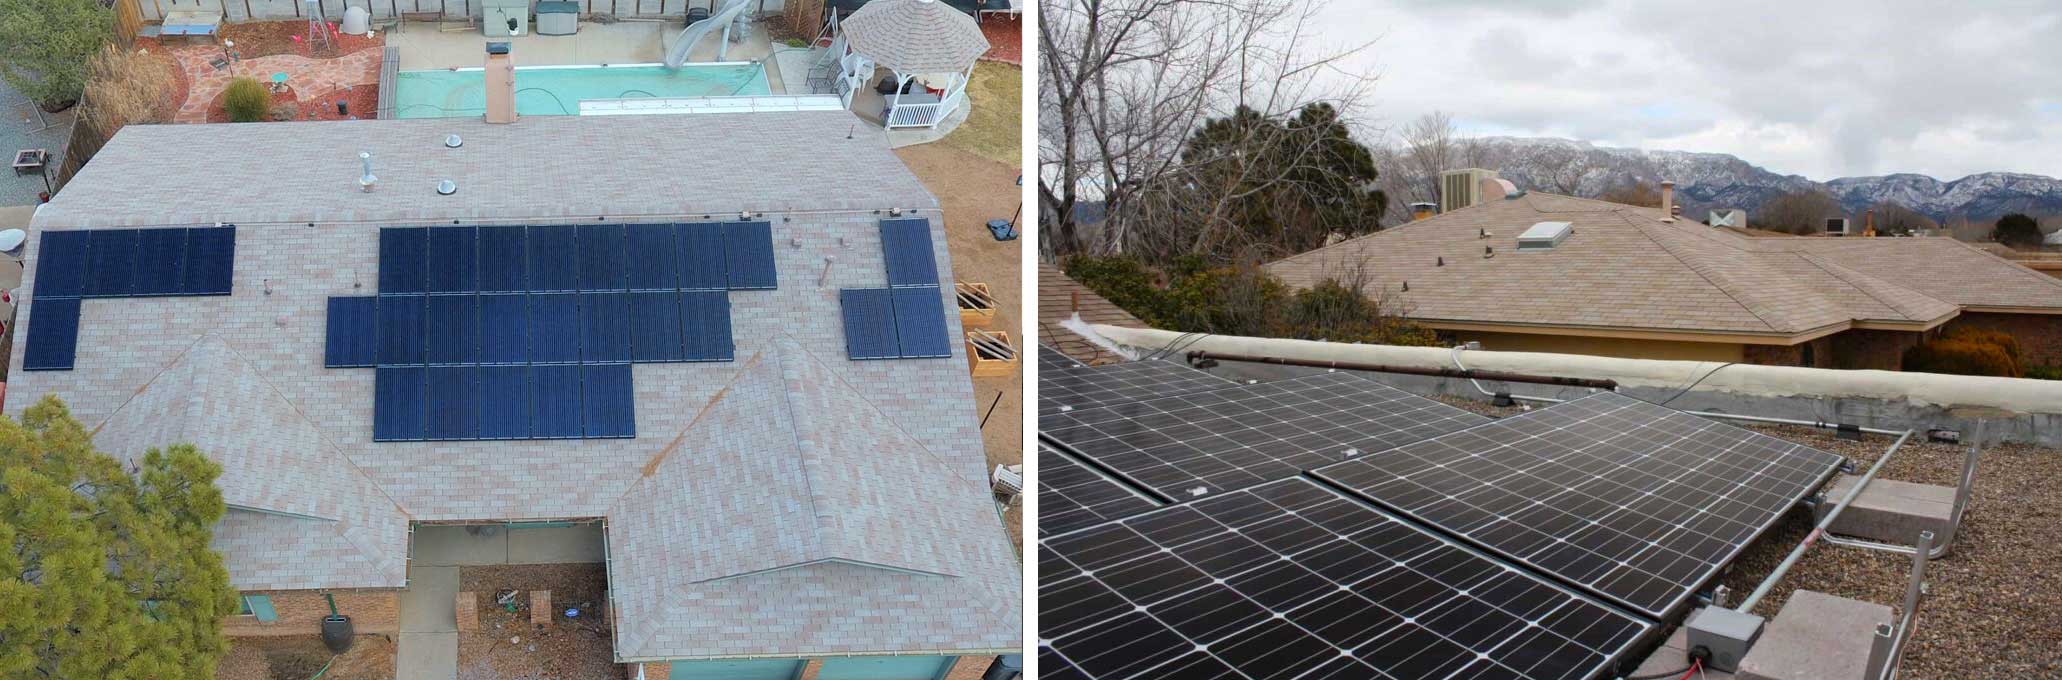 roof solar